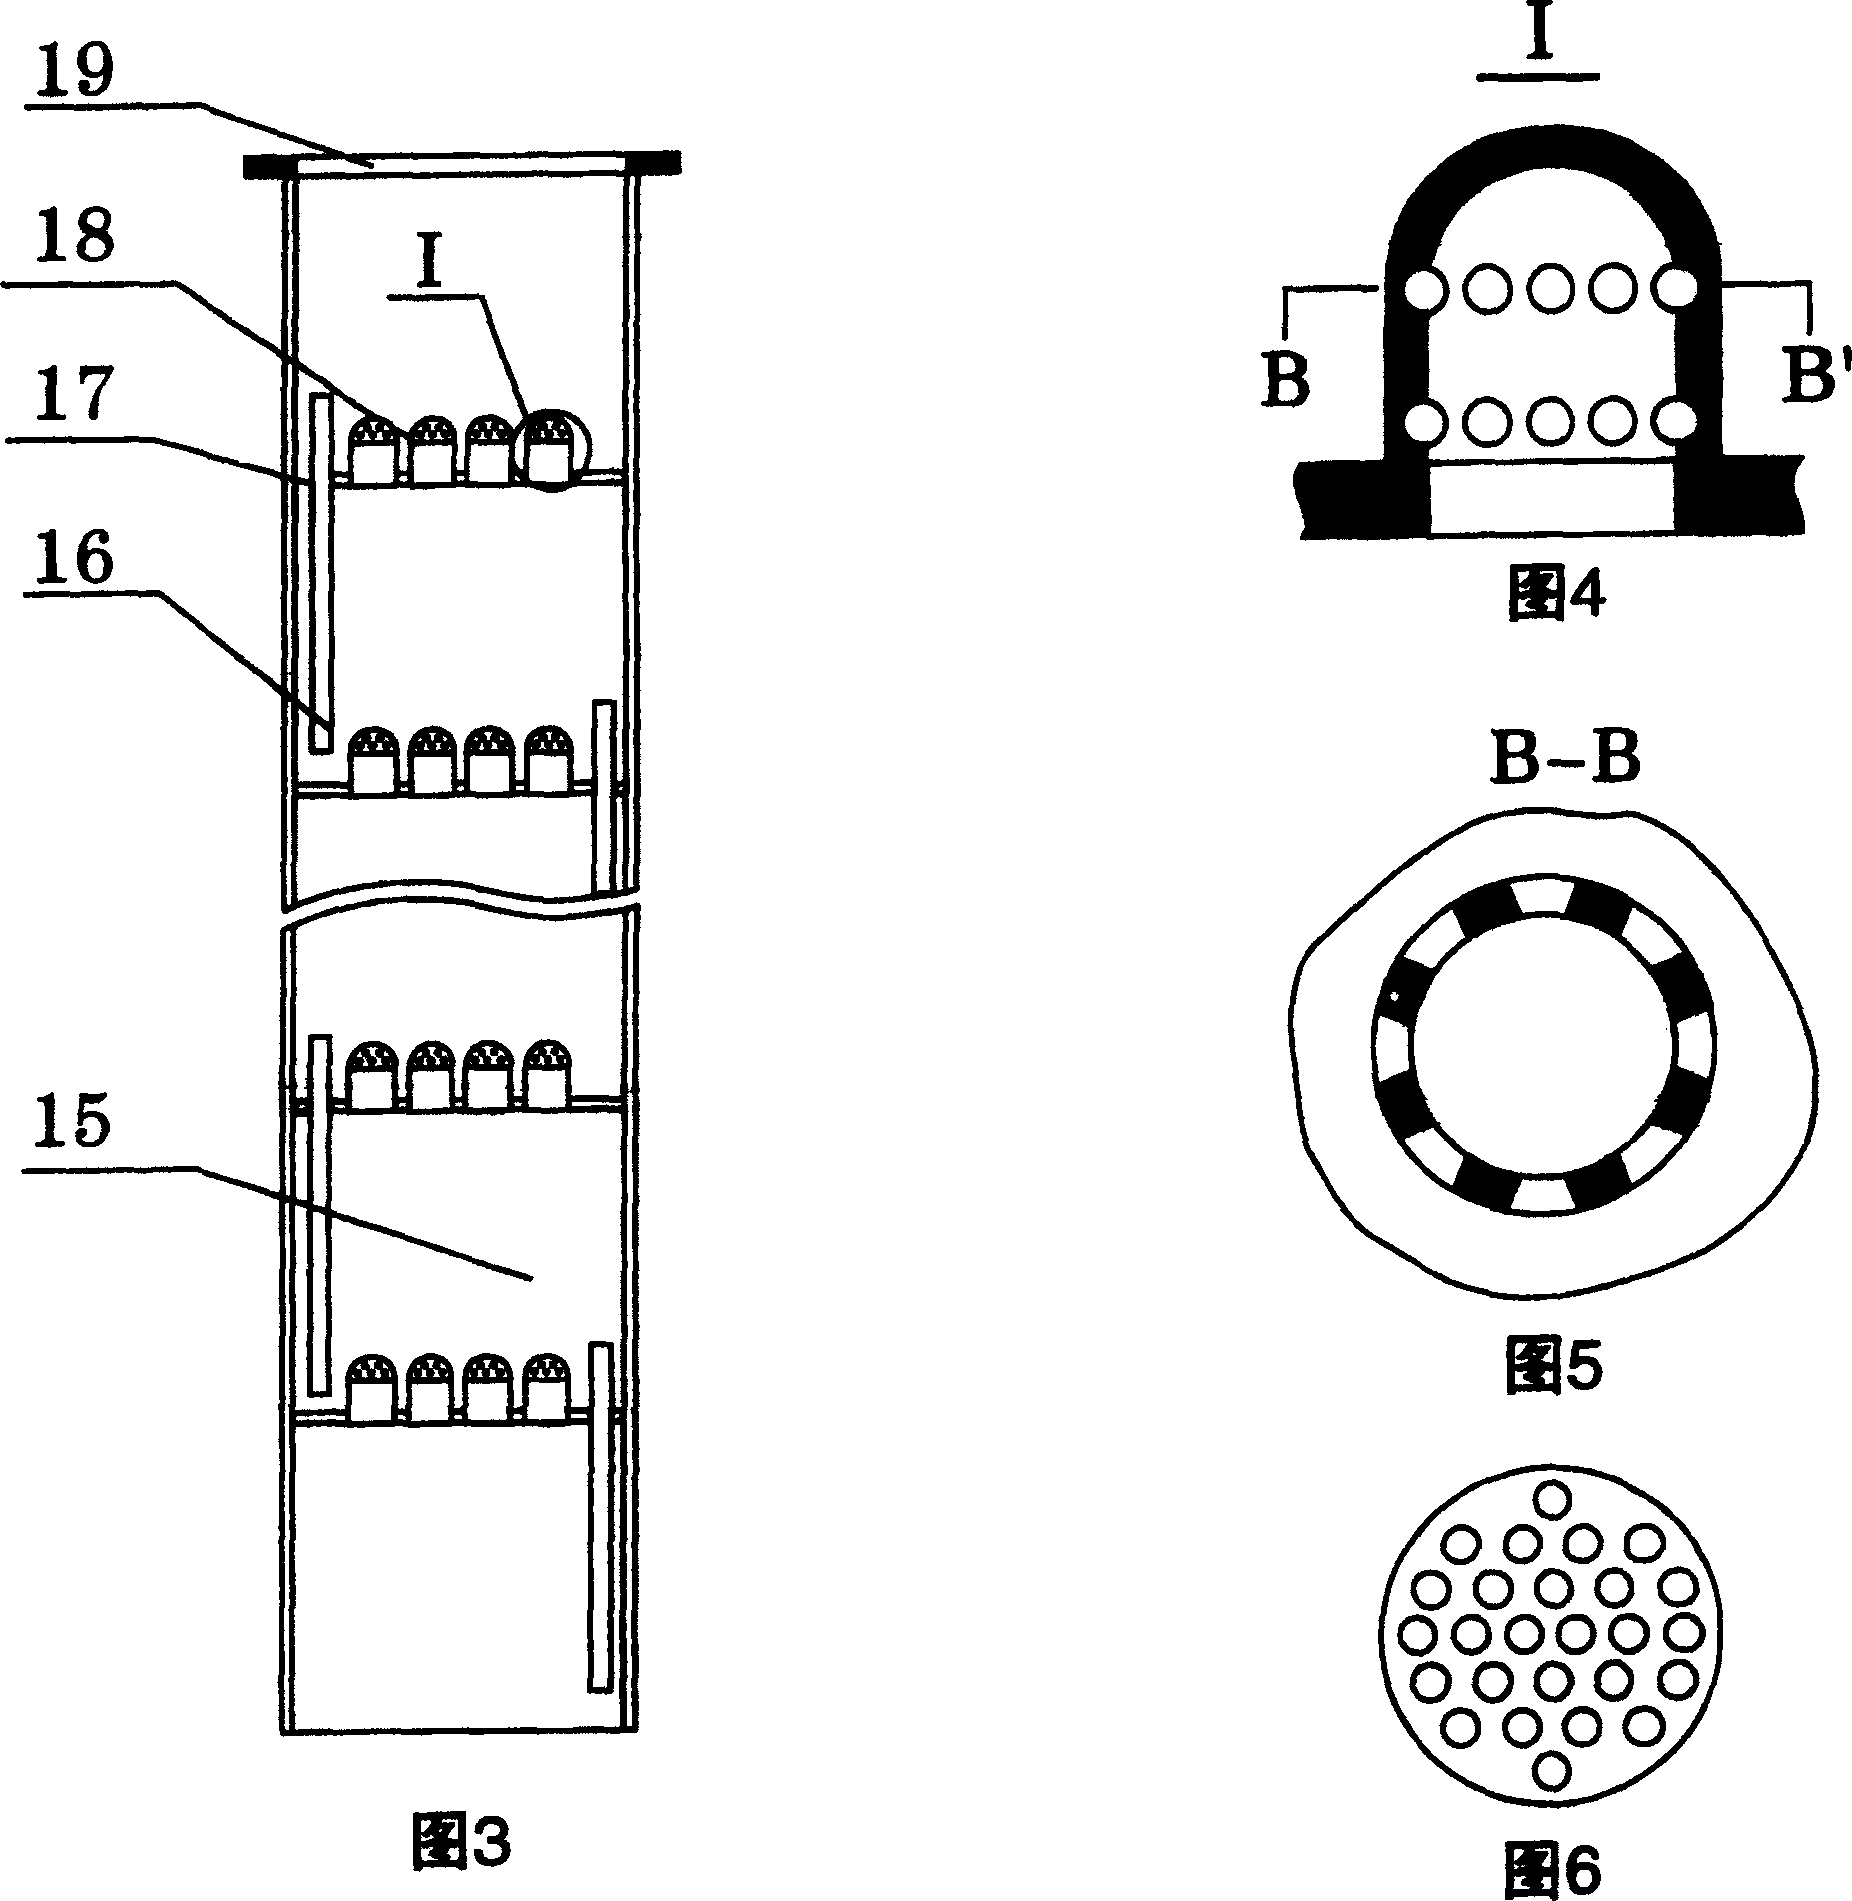 Metal antimony purifying method and apparatus